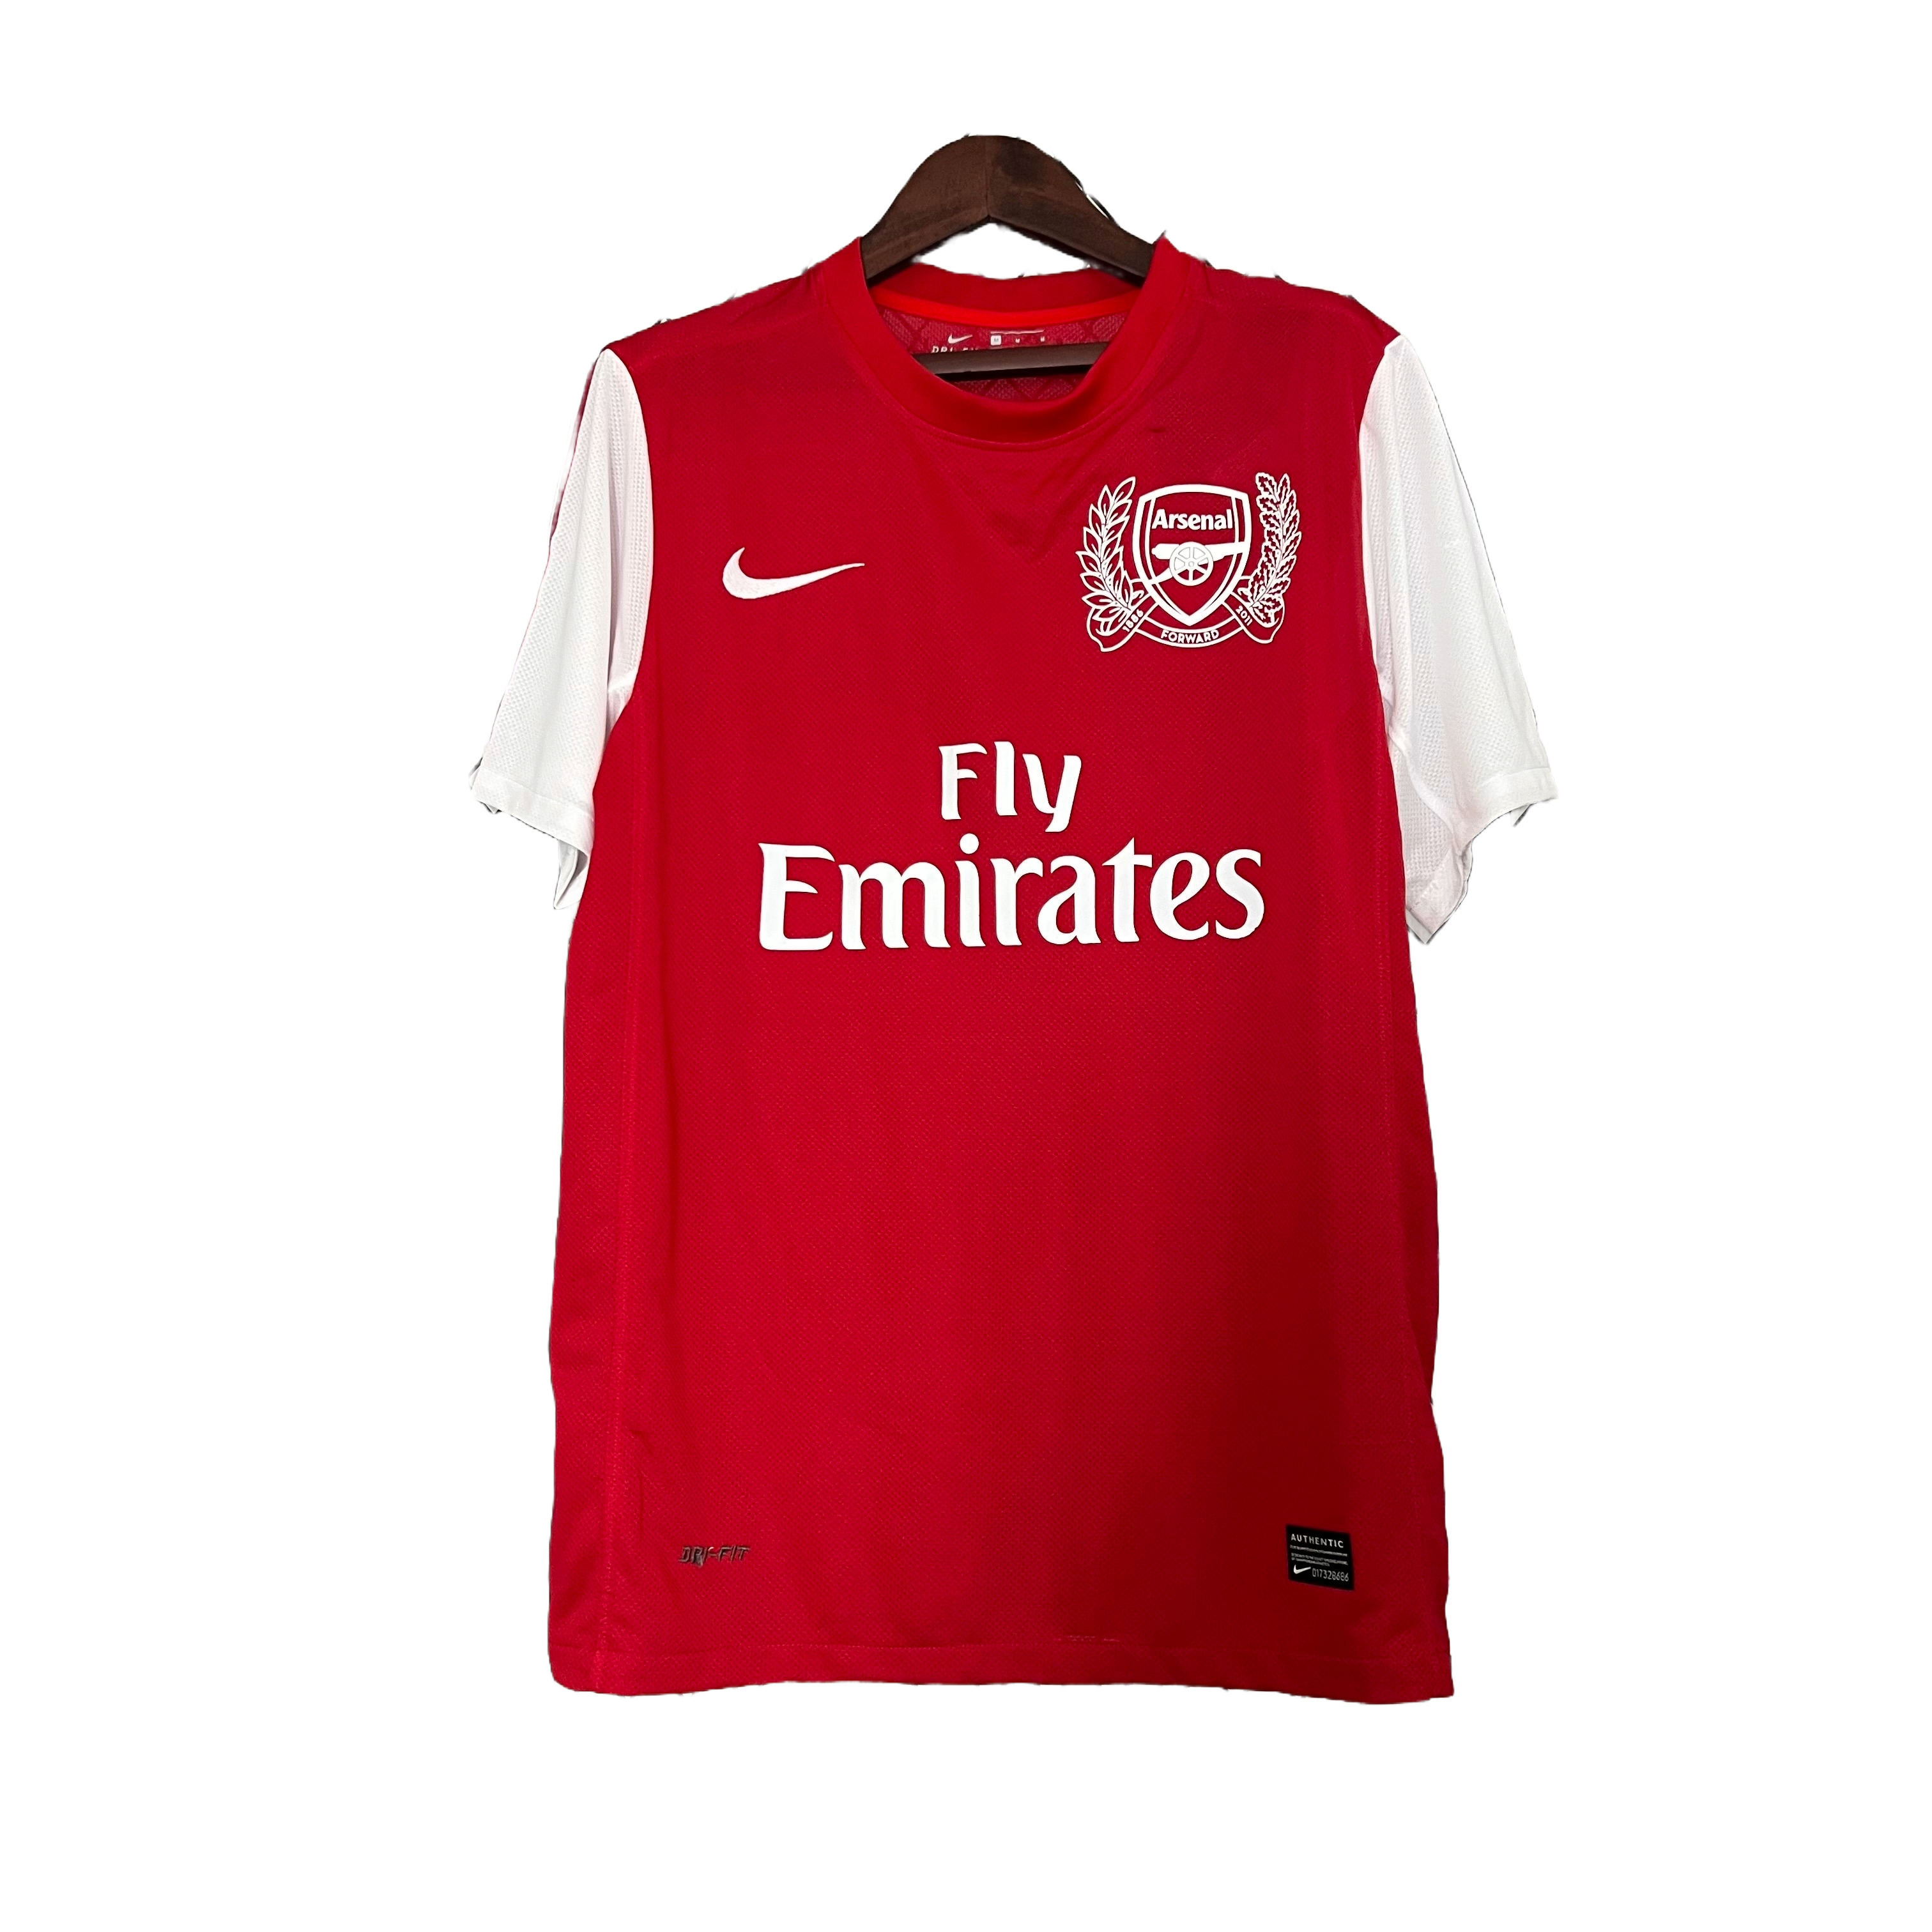 Arsenal - 11/12 Vintage